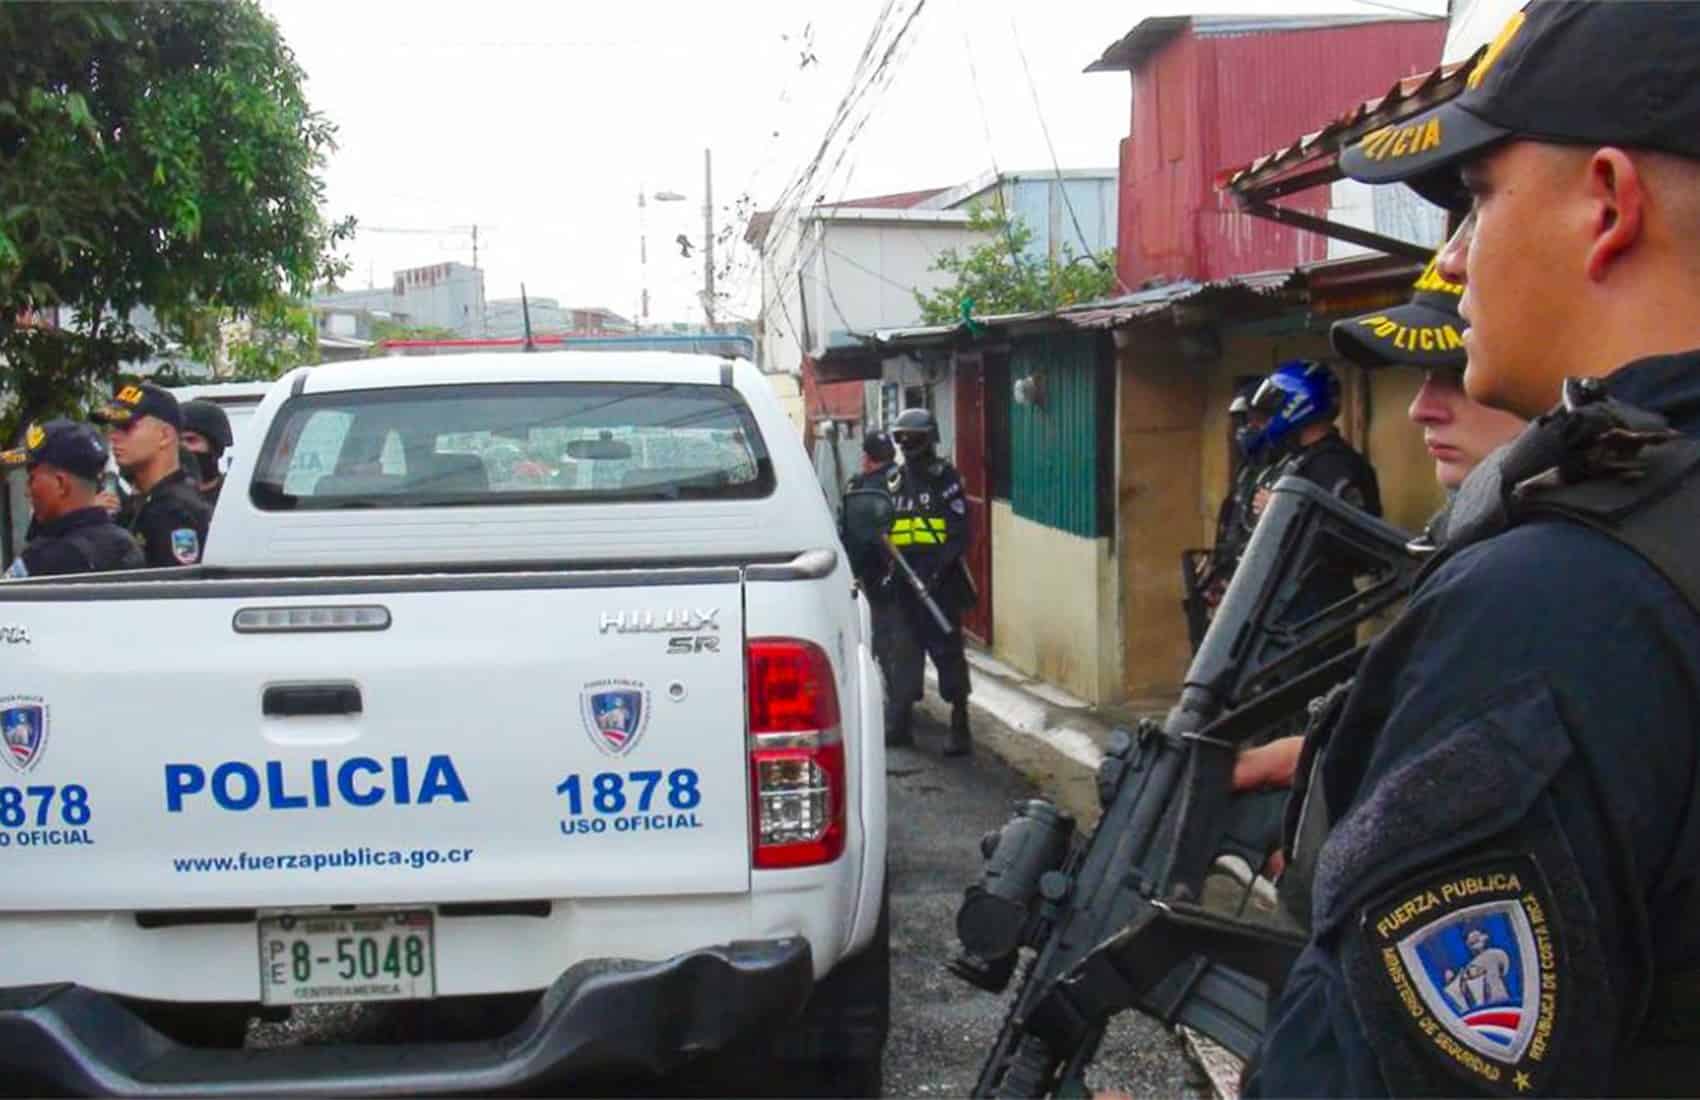 National Police, crimes in Limón